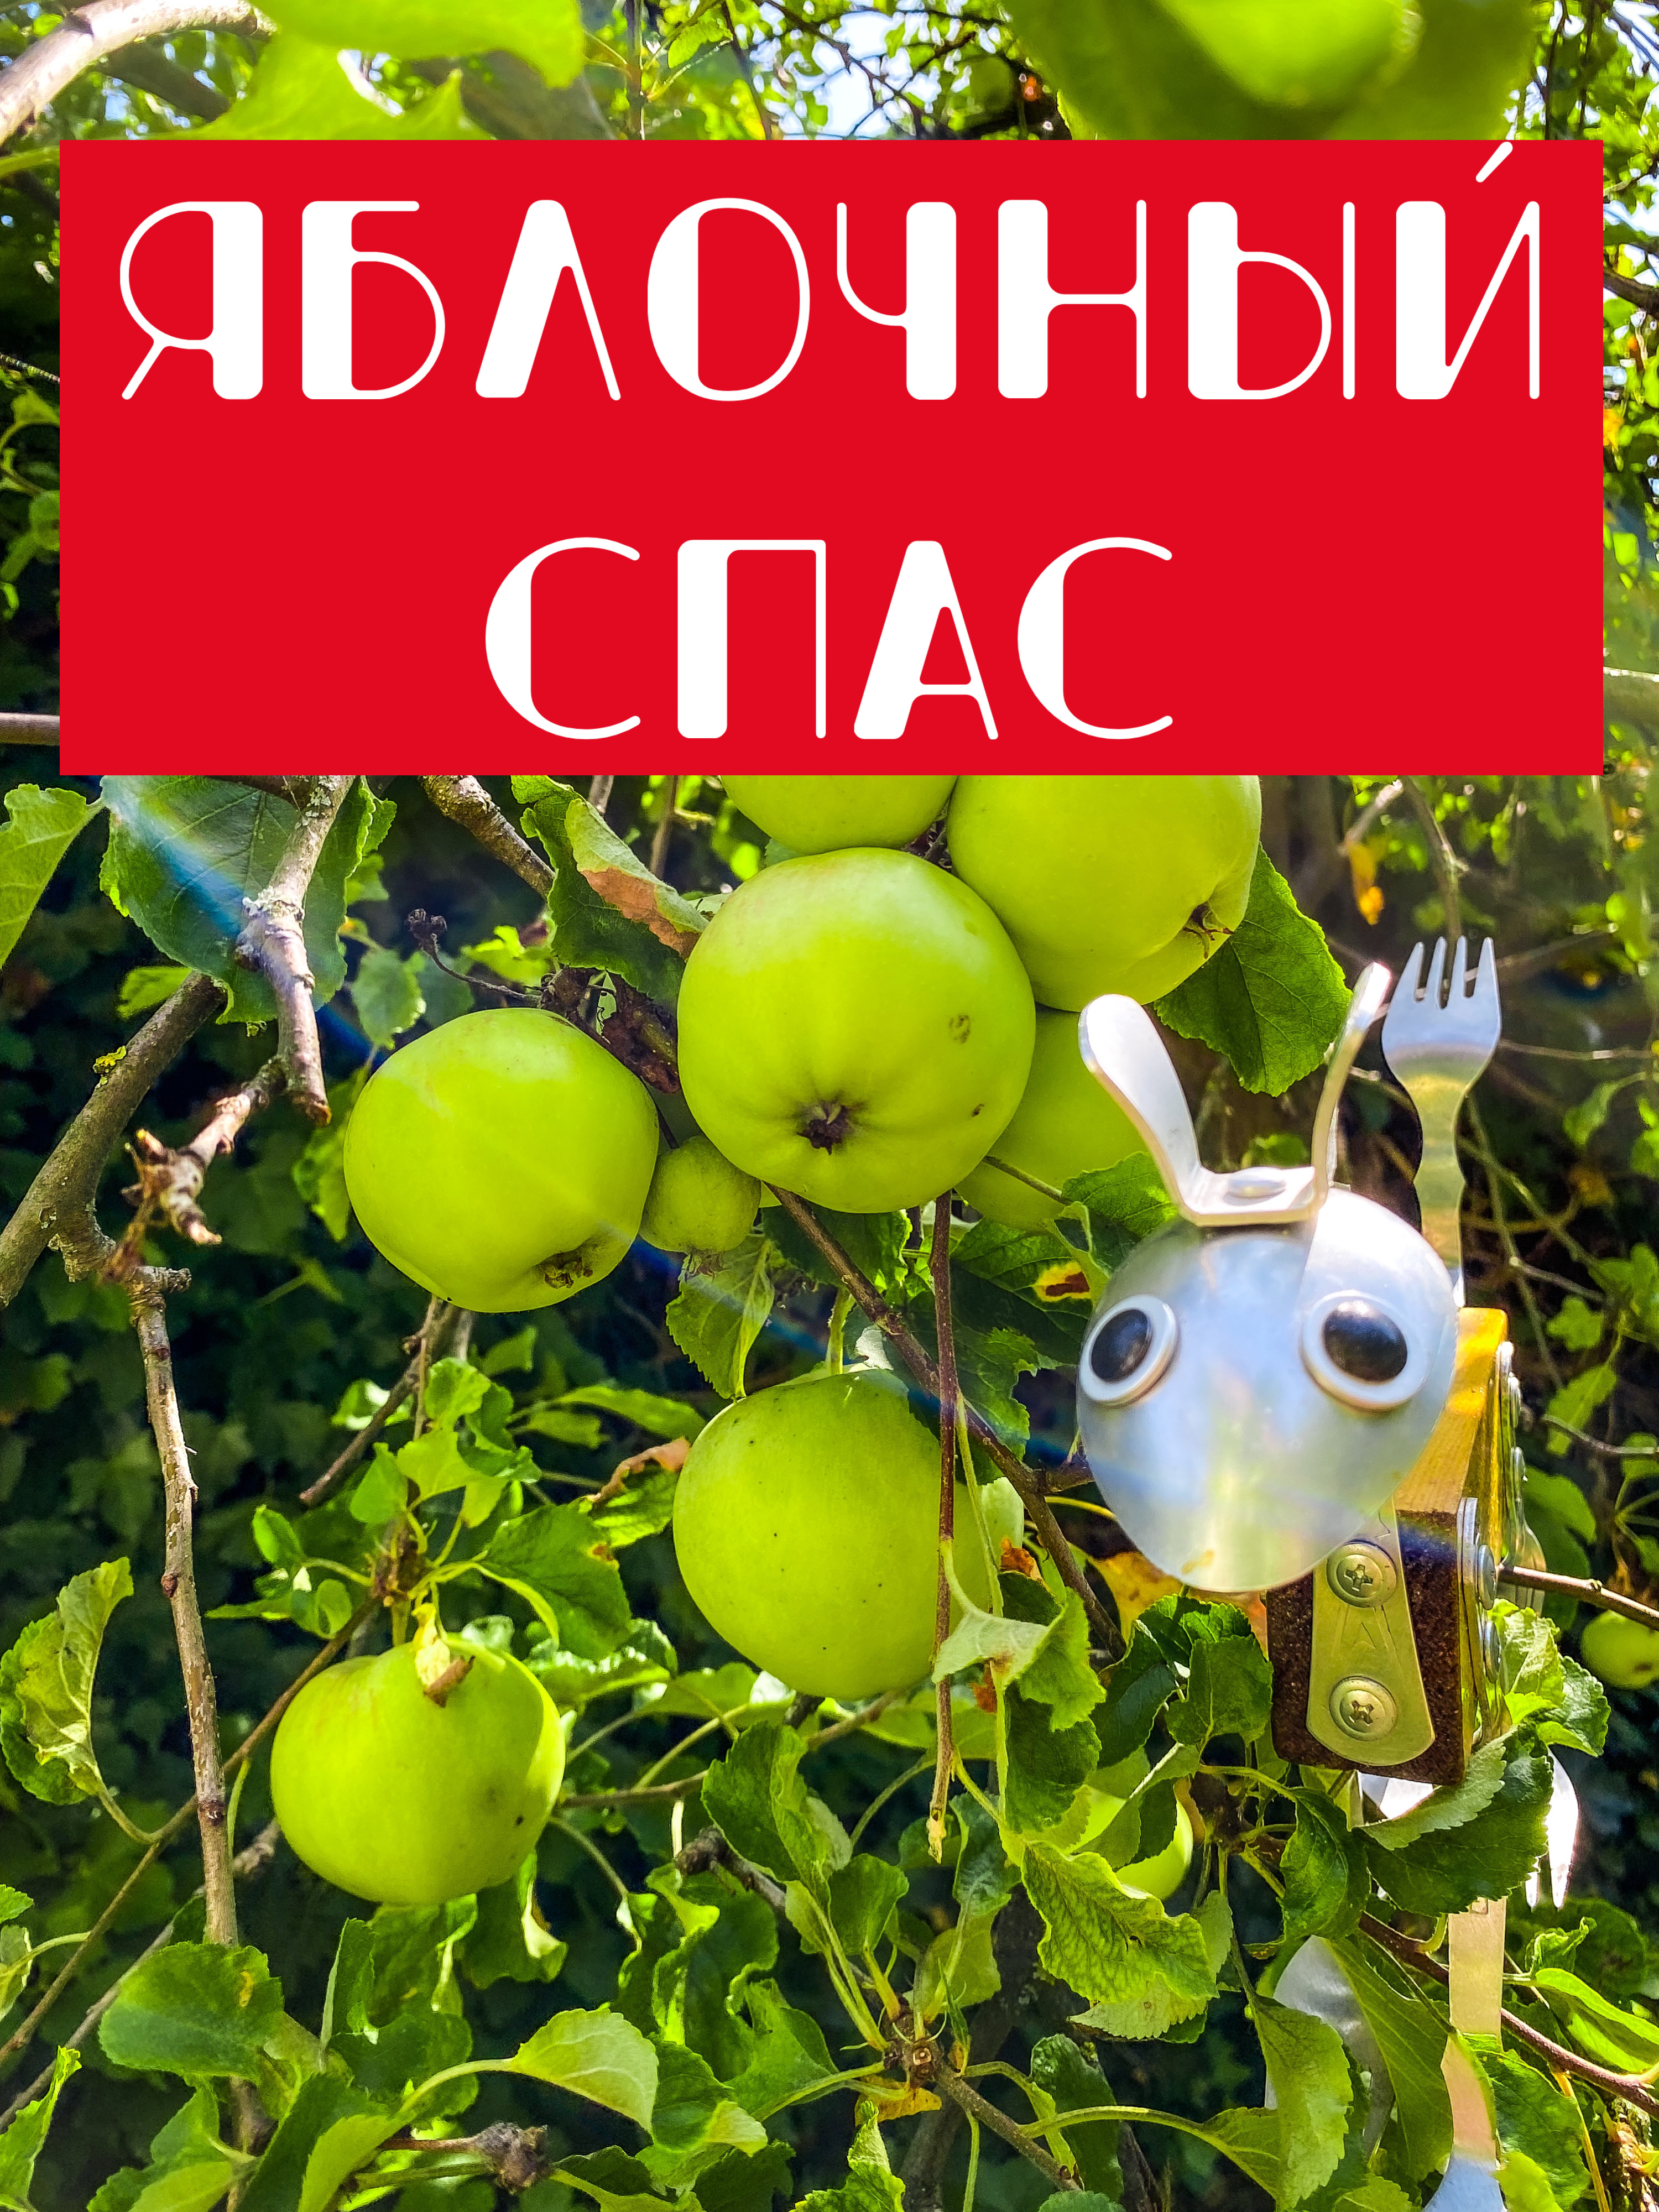 19 августа - Яблочный спас!